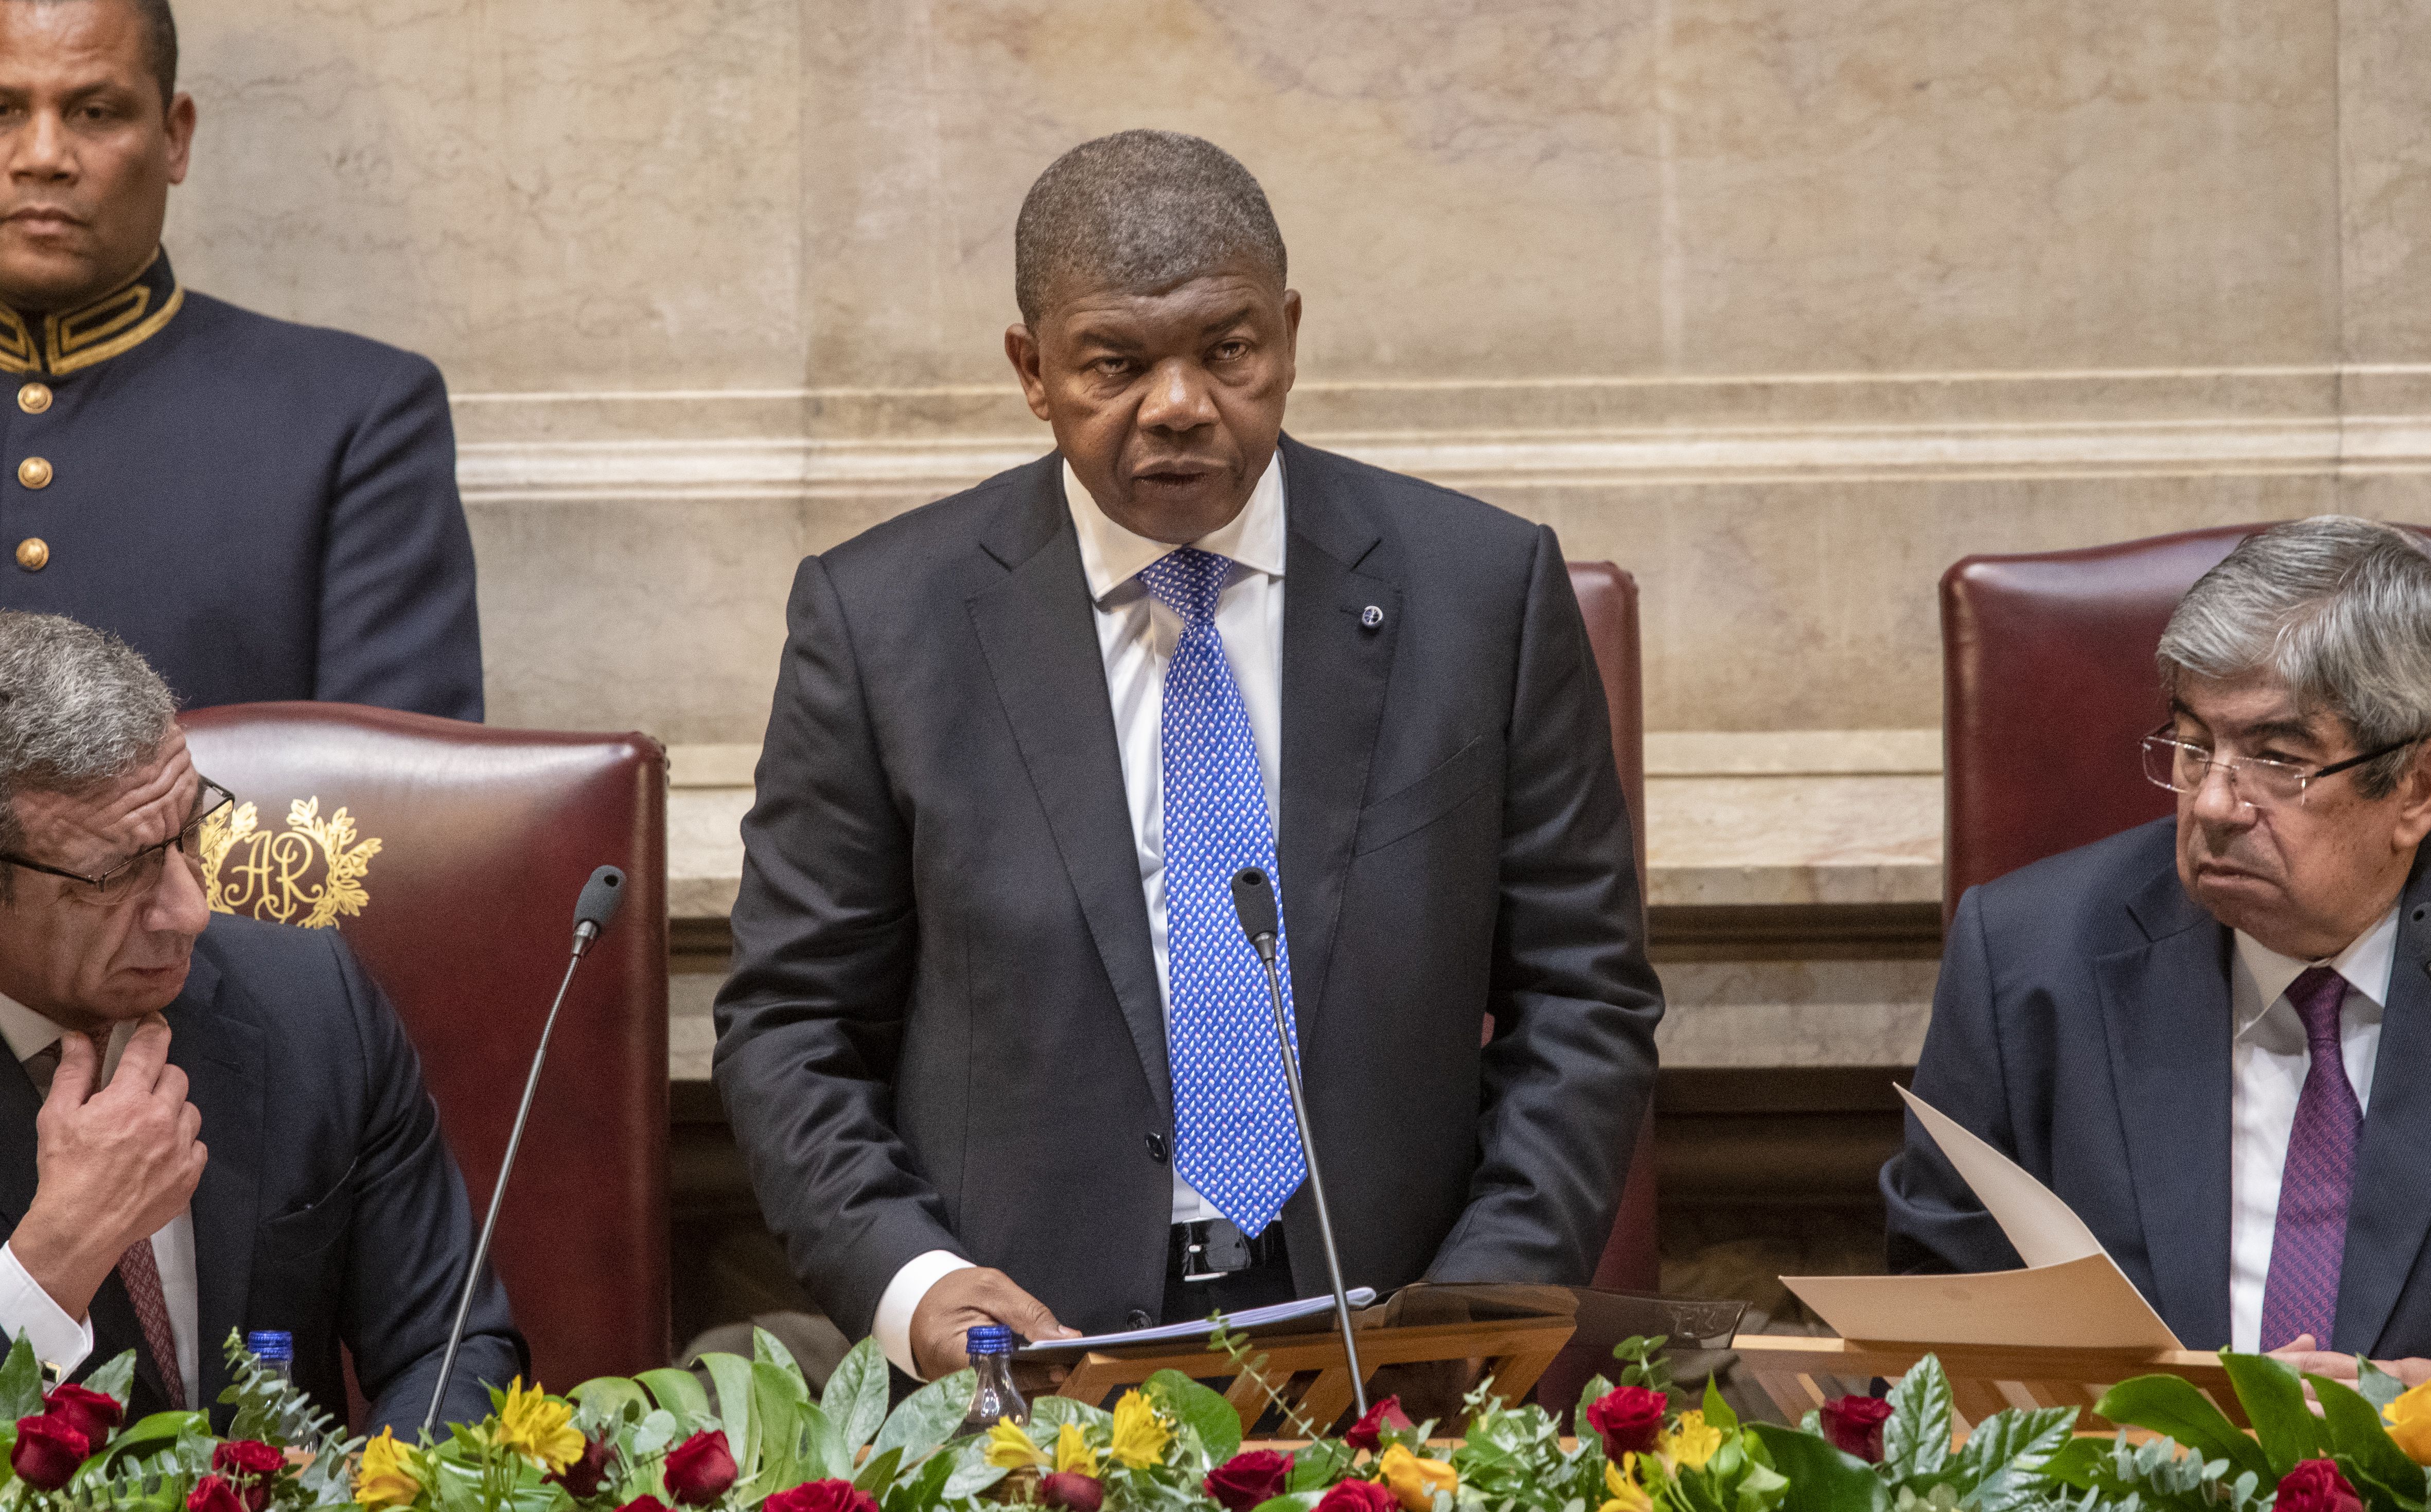 The President of Angola João Lourenço speaks at a parliamentary plenary session in his honor on November 22, 2018 in Lisbon